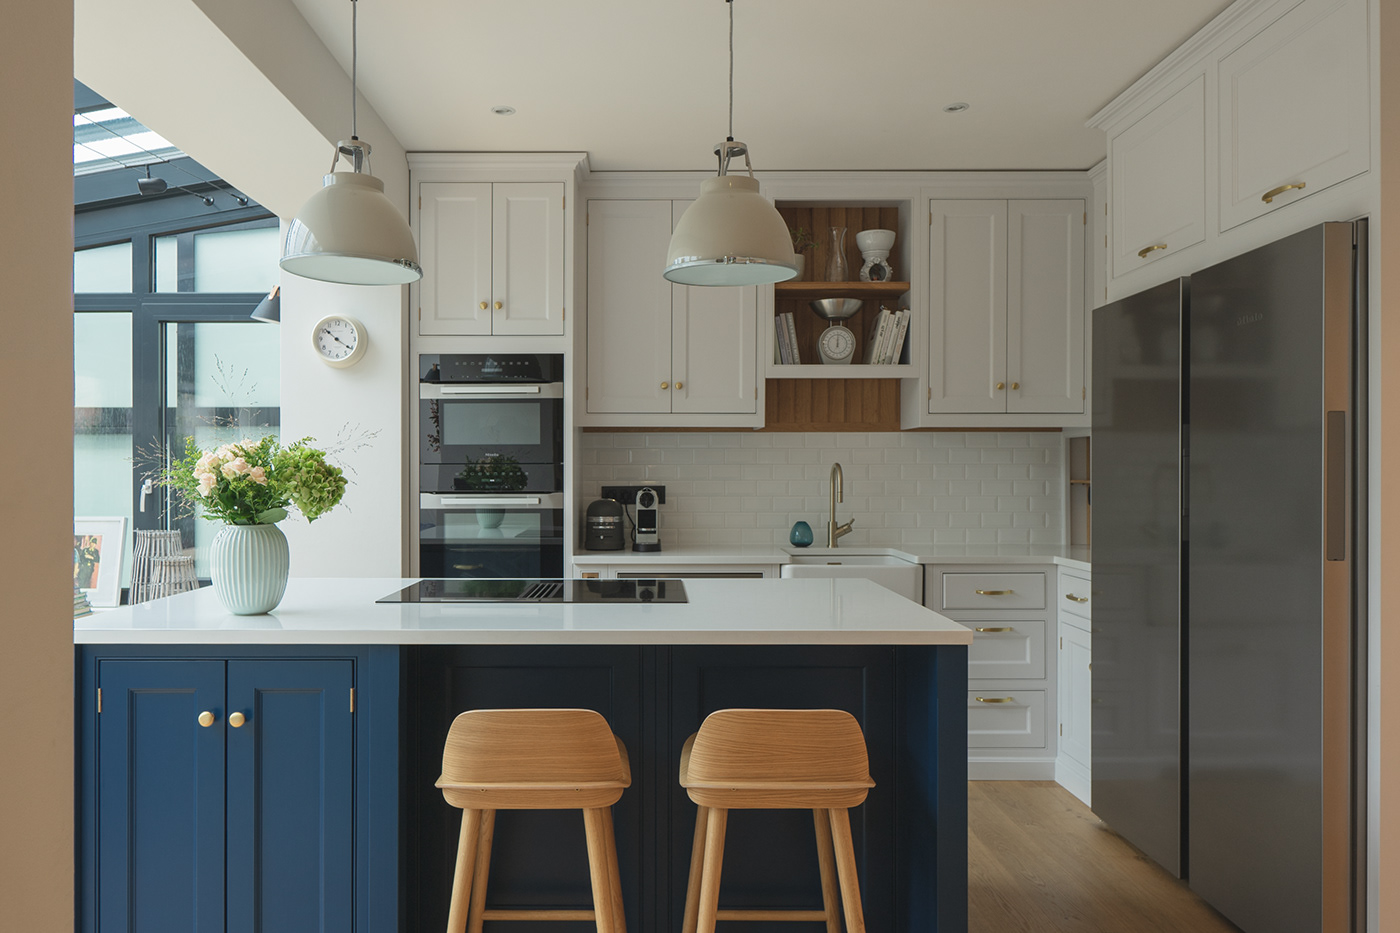 Blue Kitchen English style Interior Photography kitchen design Czech Republic english kitchen  handmade kitchens